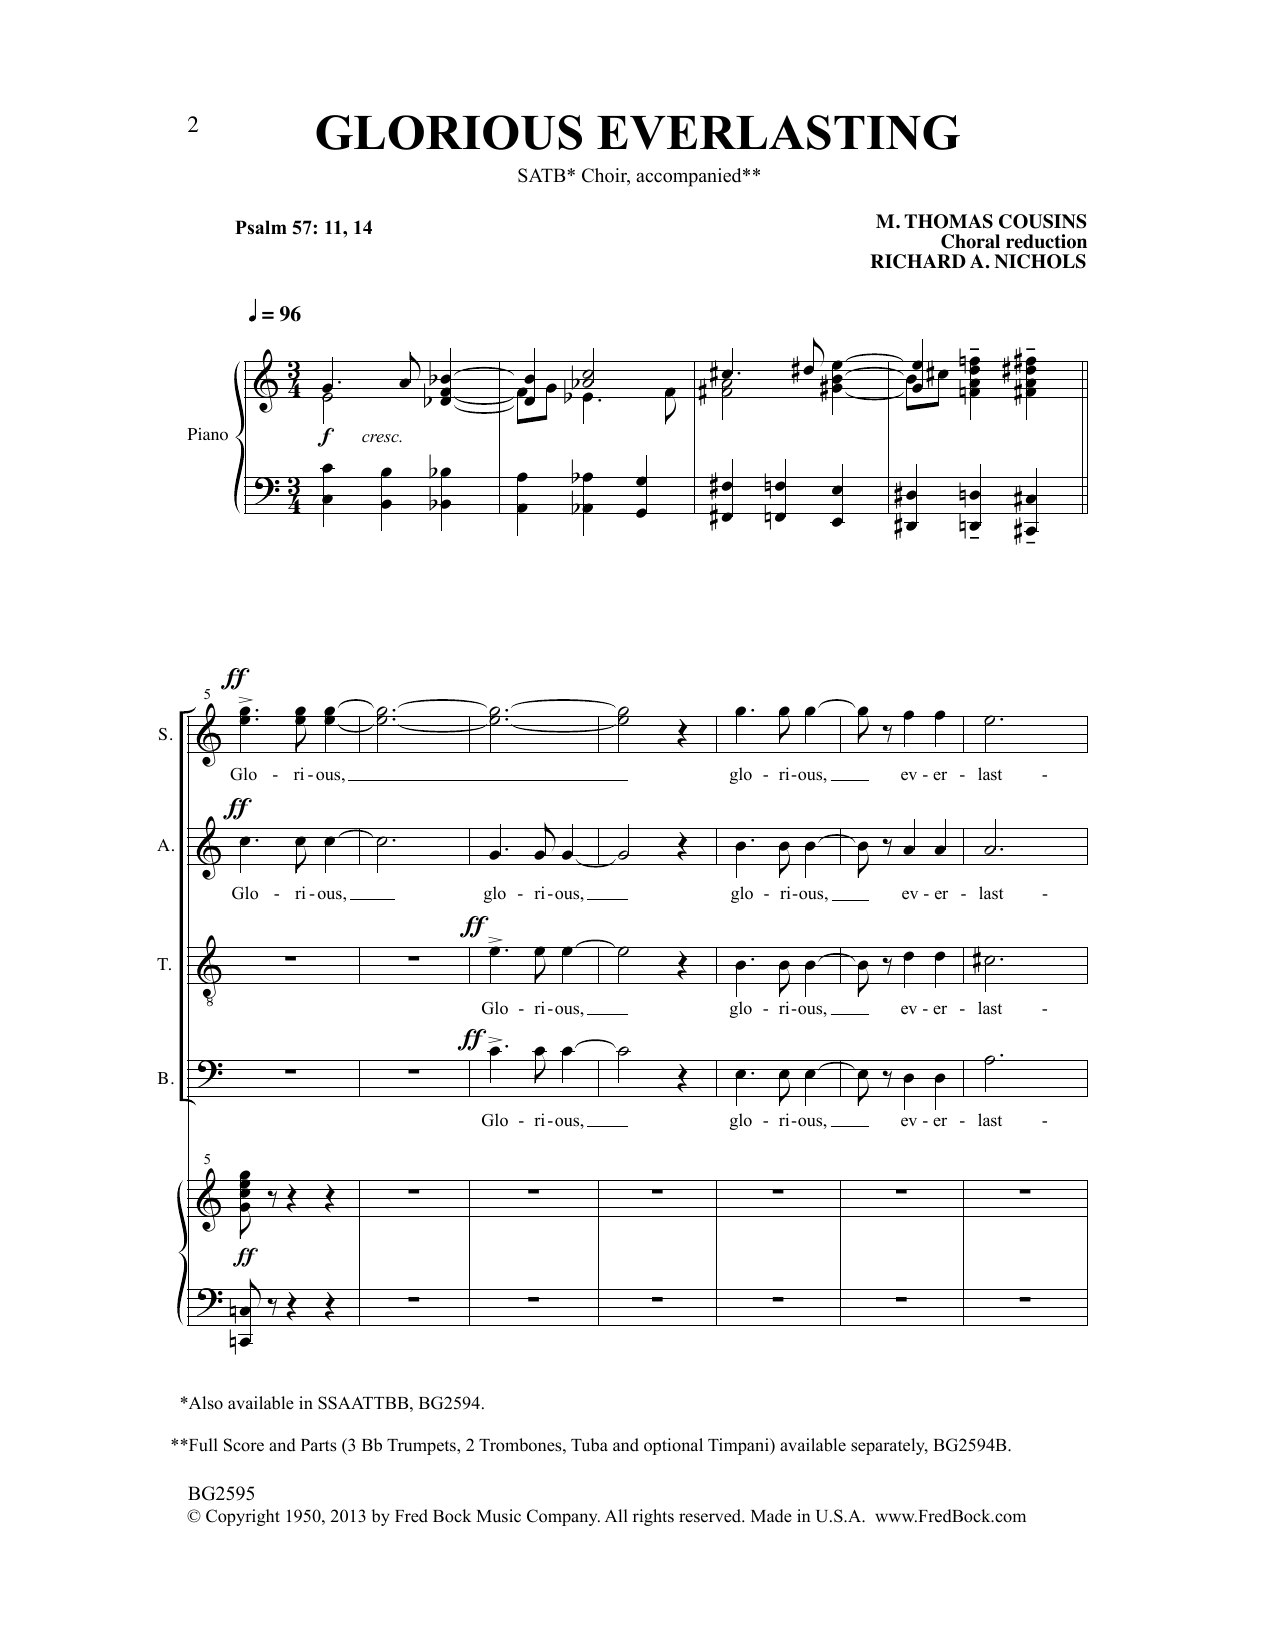 M. Thomas Cousins Glorious Everlasting (arr. Richard A. Nichols) Sheet Music Notes & Chords for SATB Choir - Download or Print PDF